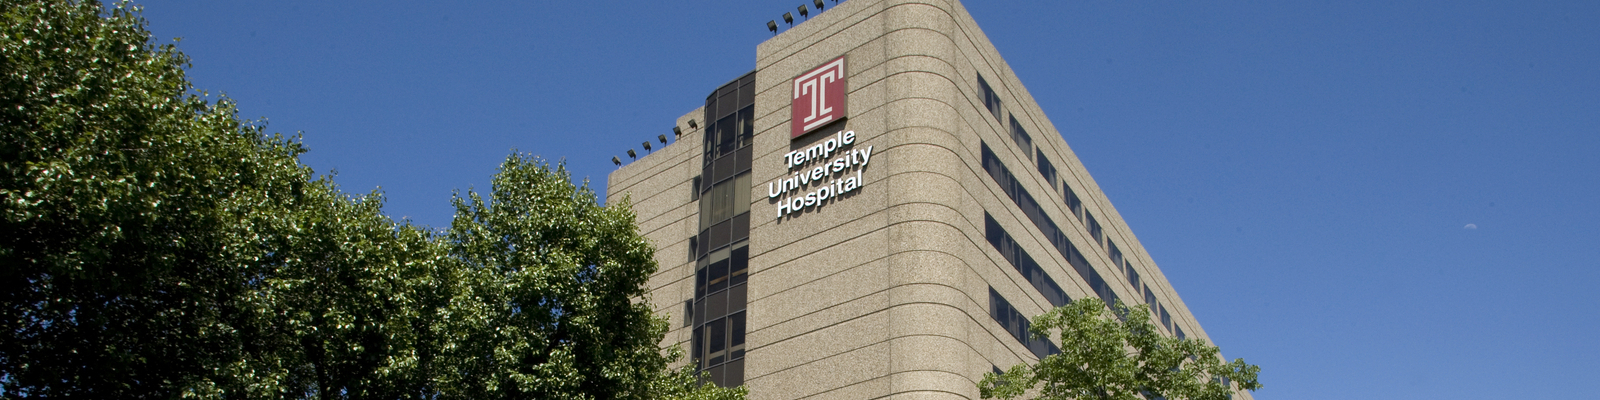 Temple University Hospital building